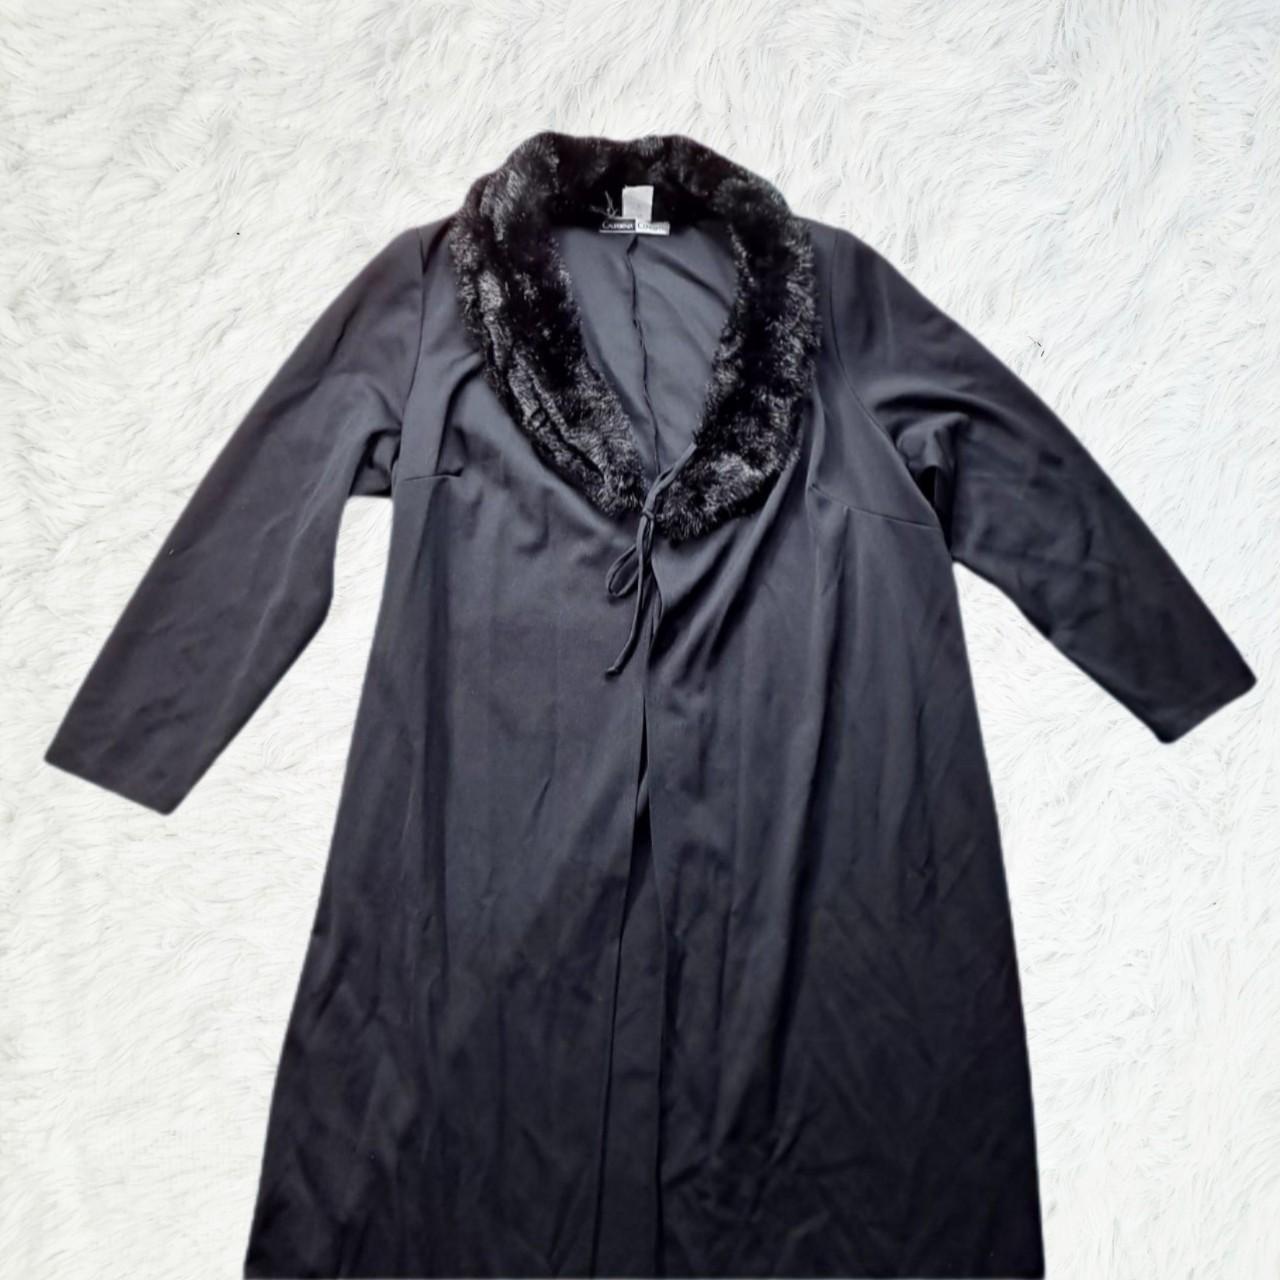 Product Image 1 - Vintage goth duster jacket!
Rare plus